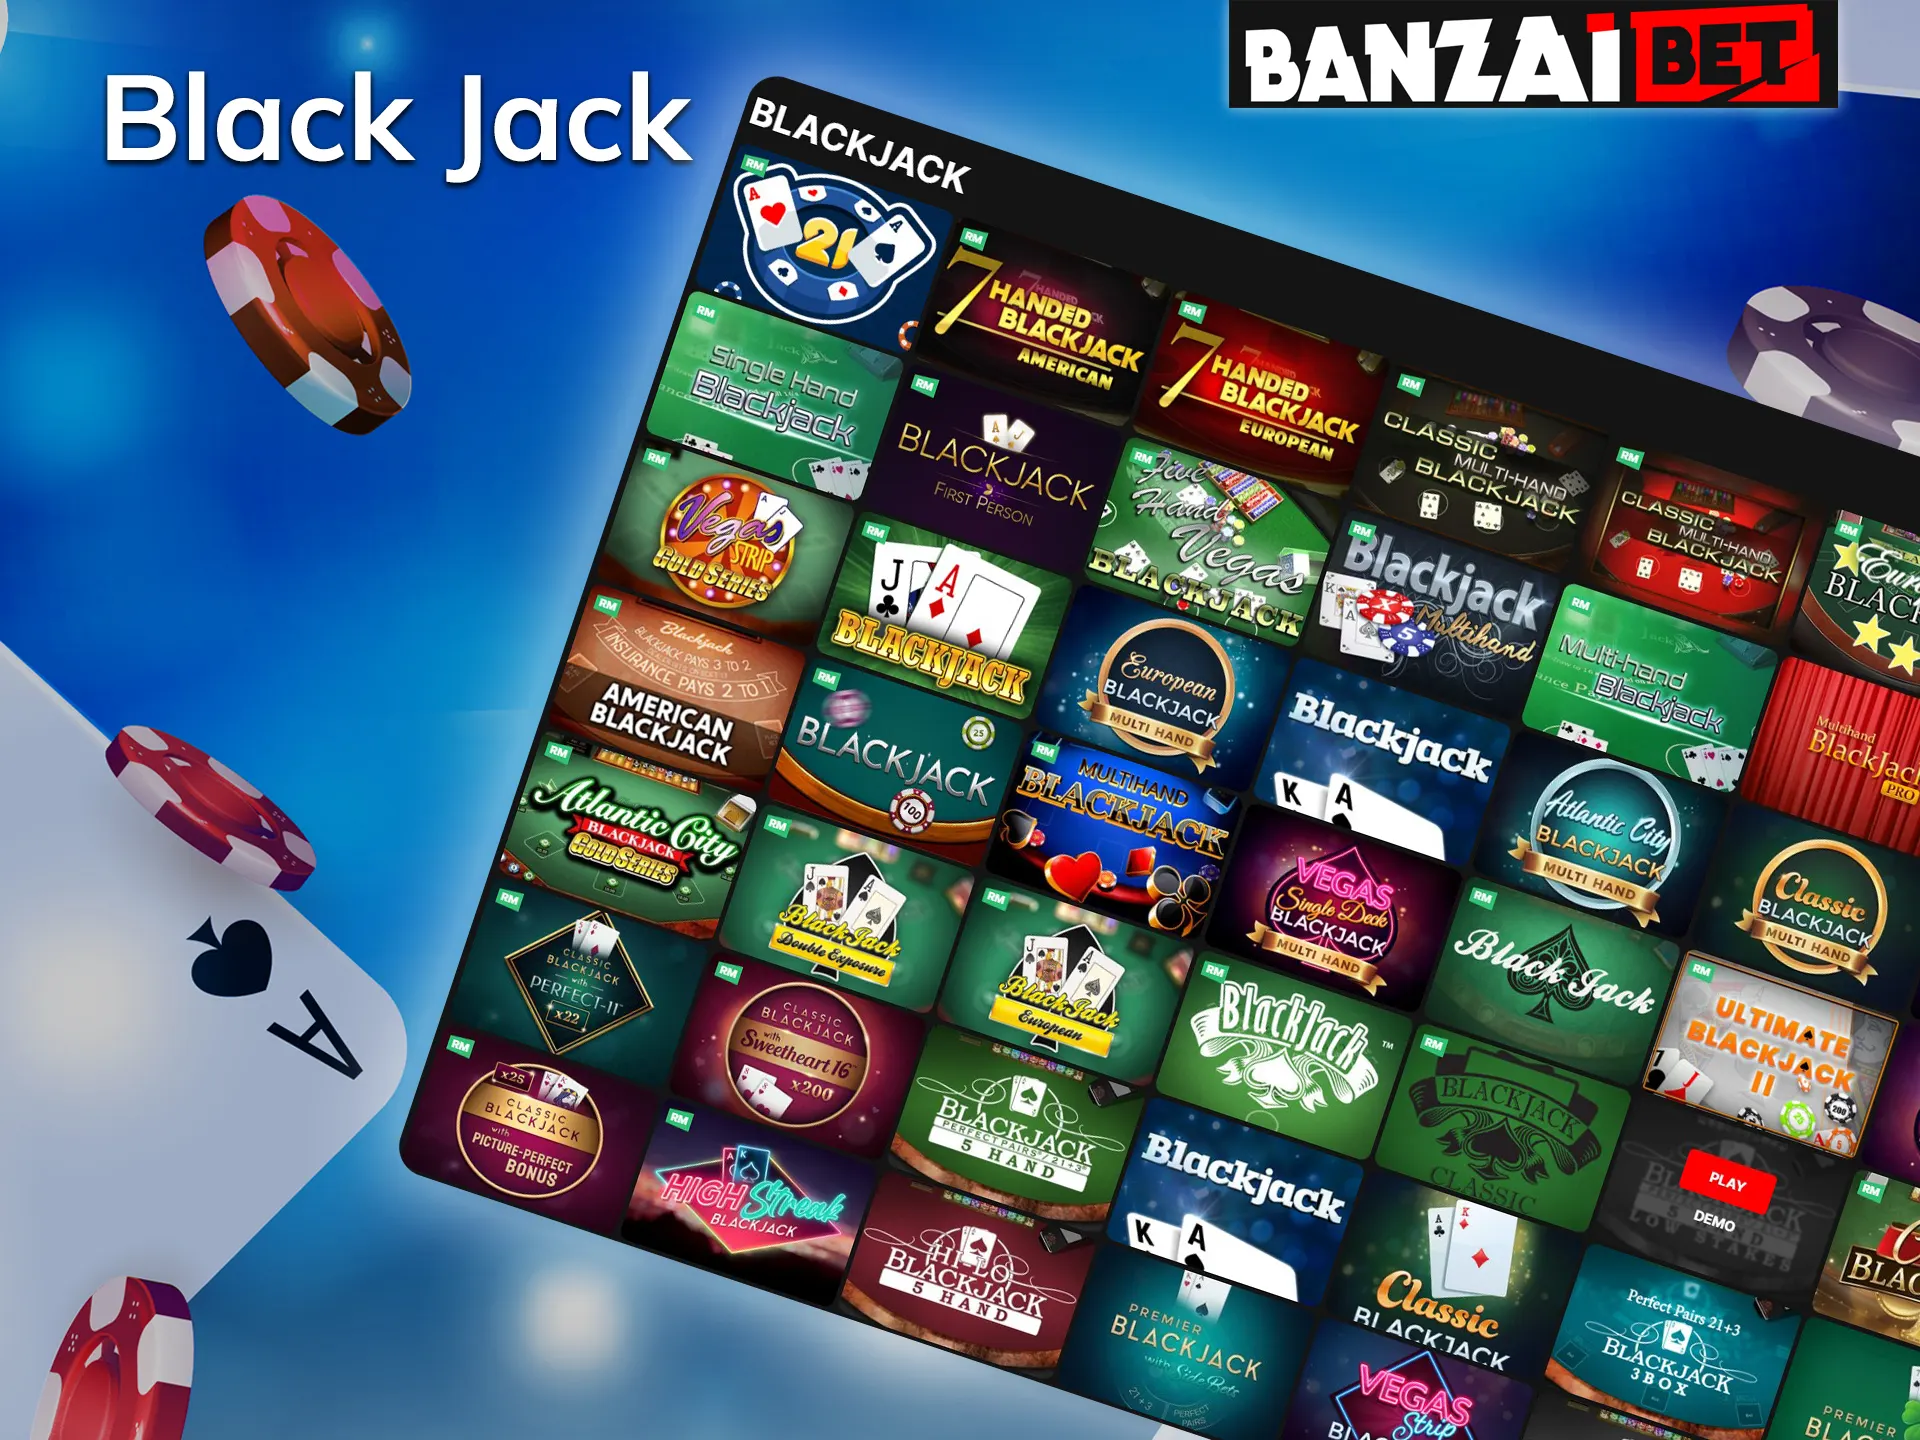 Play Black Jack at Banzai Bet online casino.